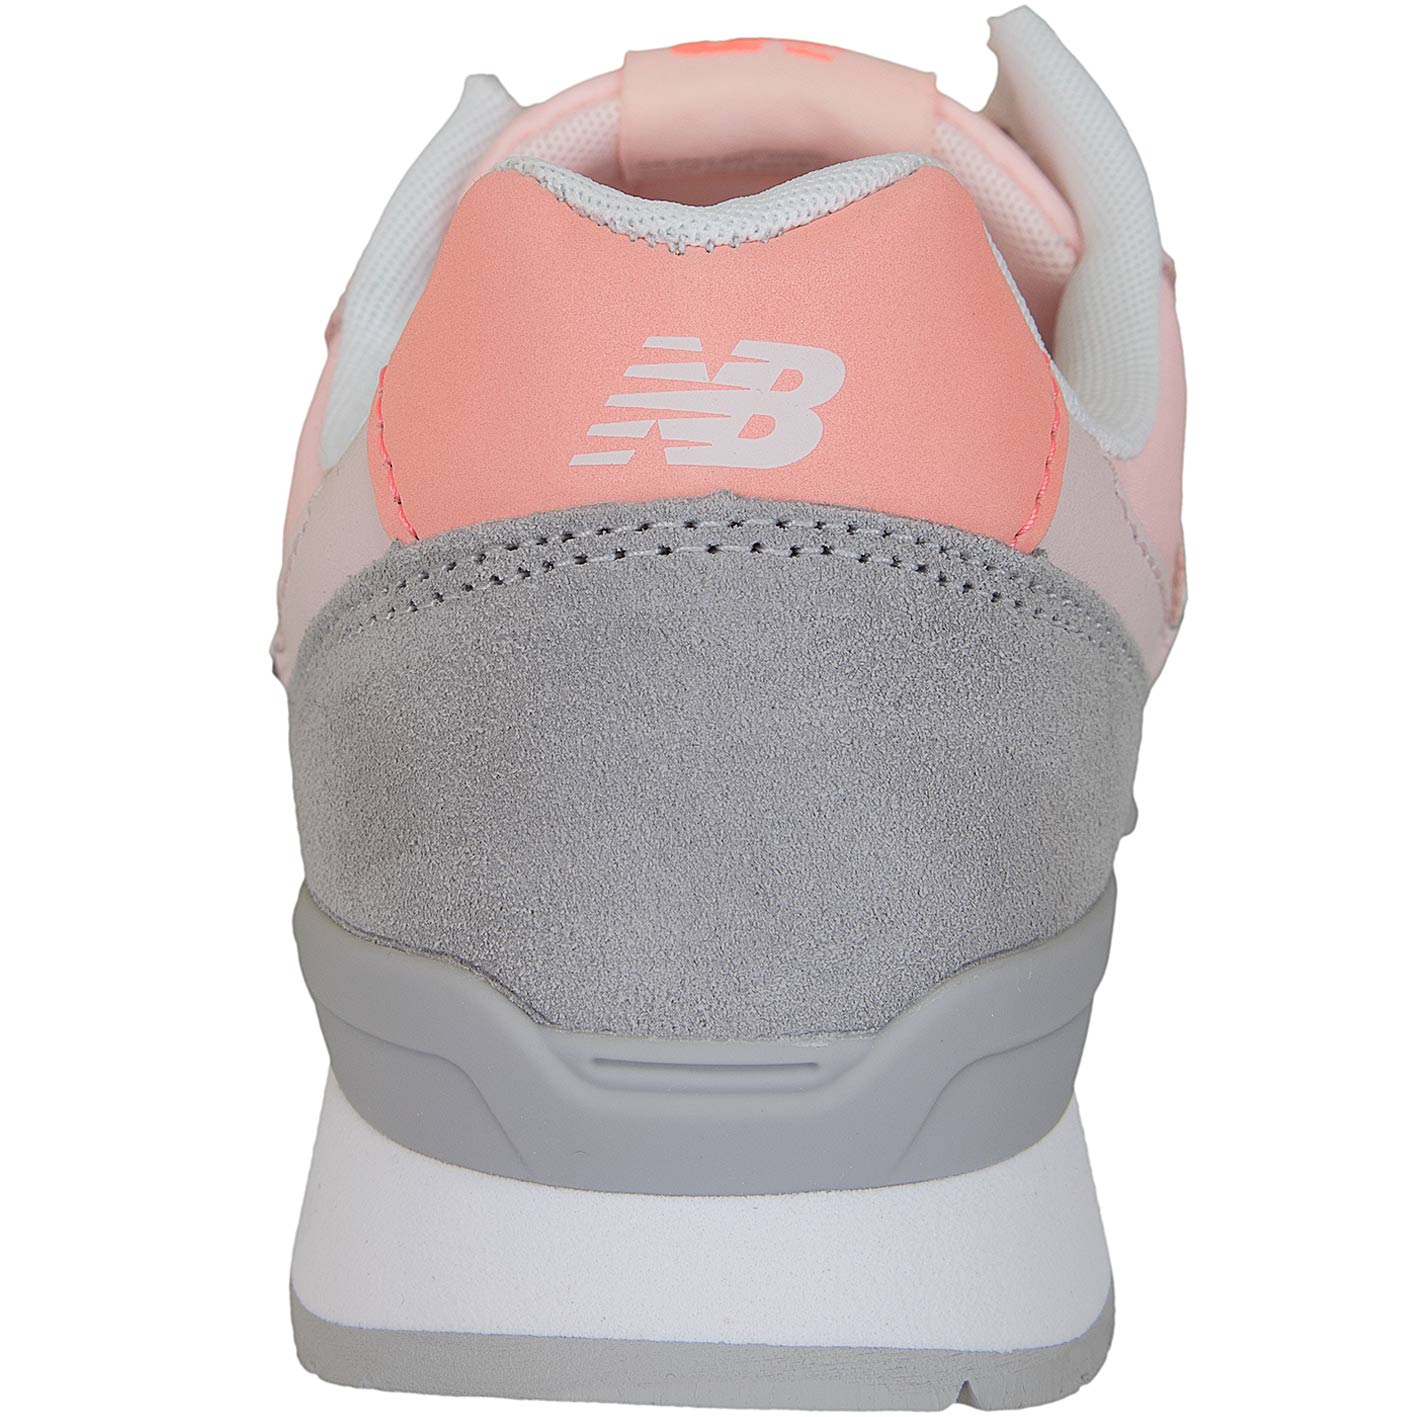 ☆ New Balance Damen Sneaker 996 Wildleder/Textil rosa - hier bestellen!